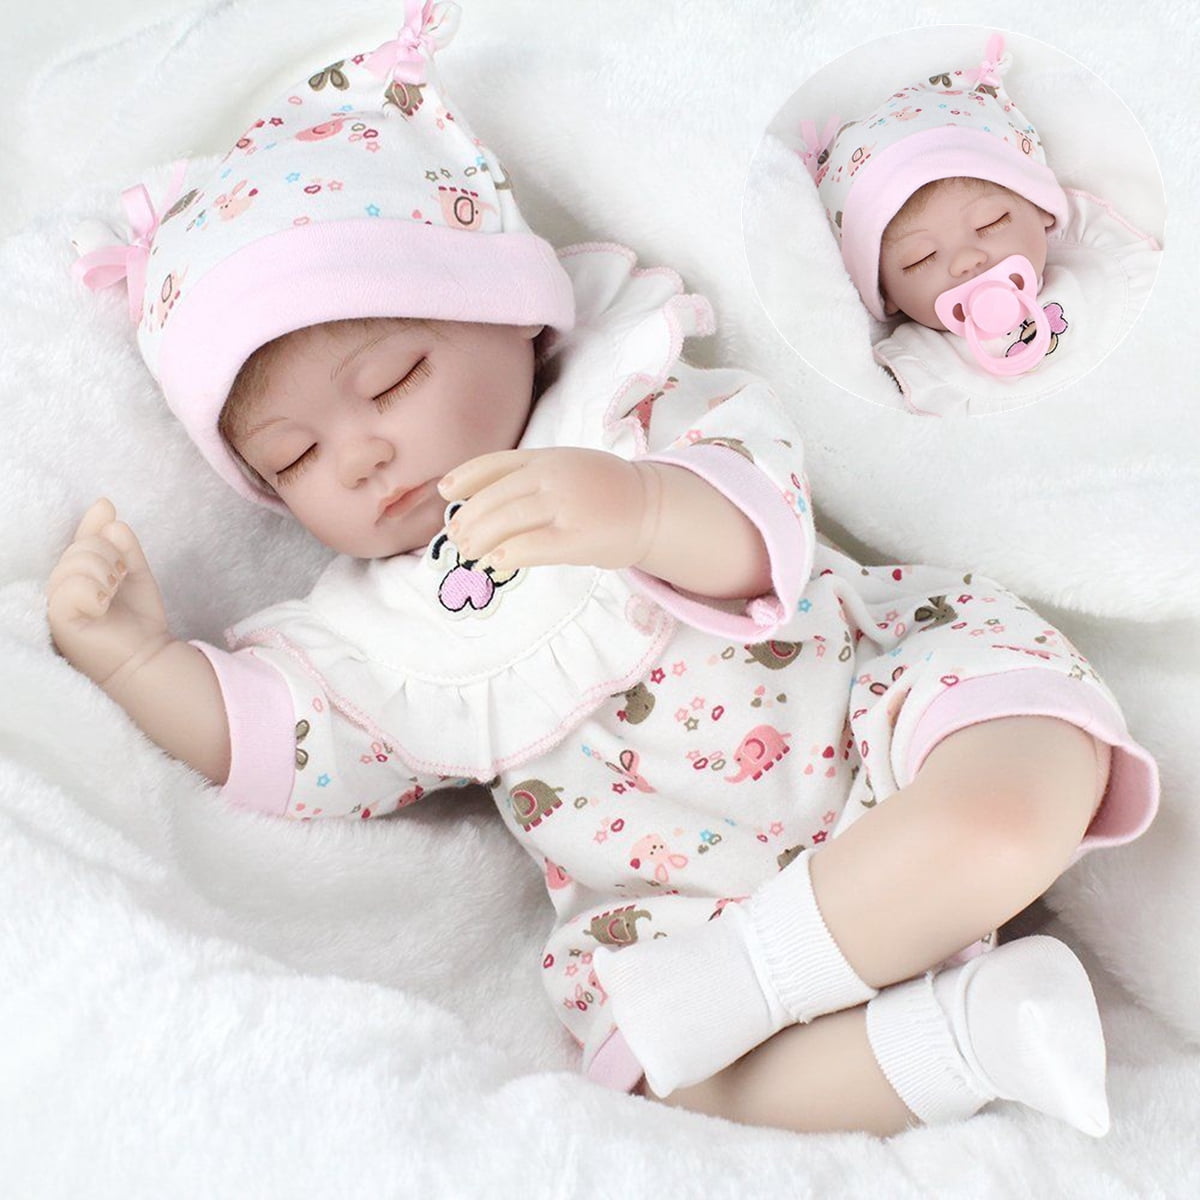 Handmade Lifelike Realistic 16" Sleeping Newborn Vinyl Silicone Reborn Baby Doll 